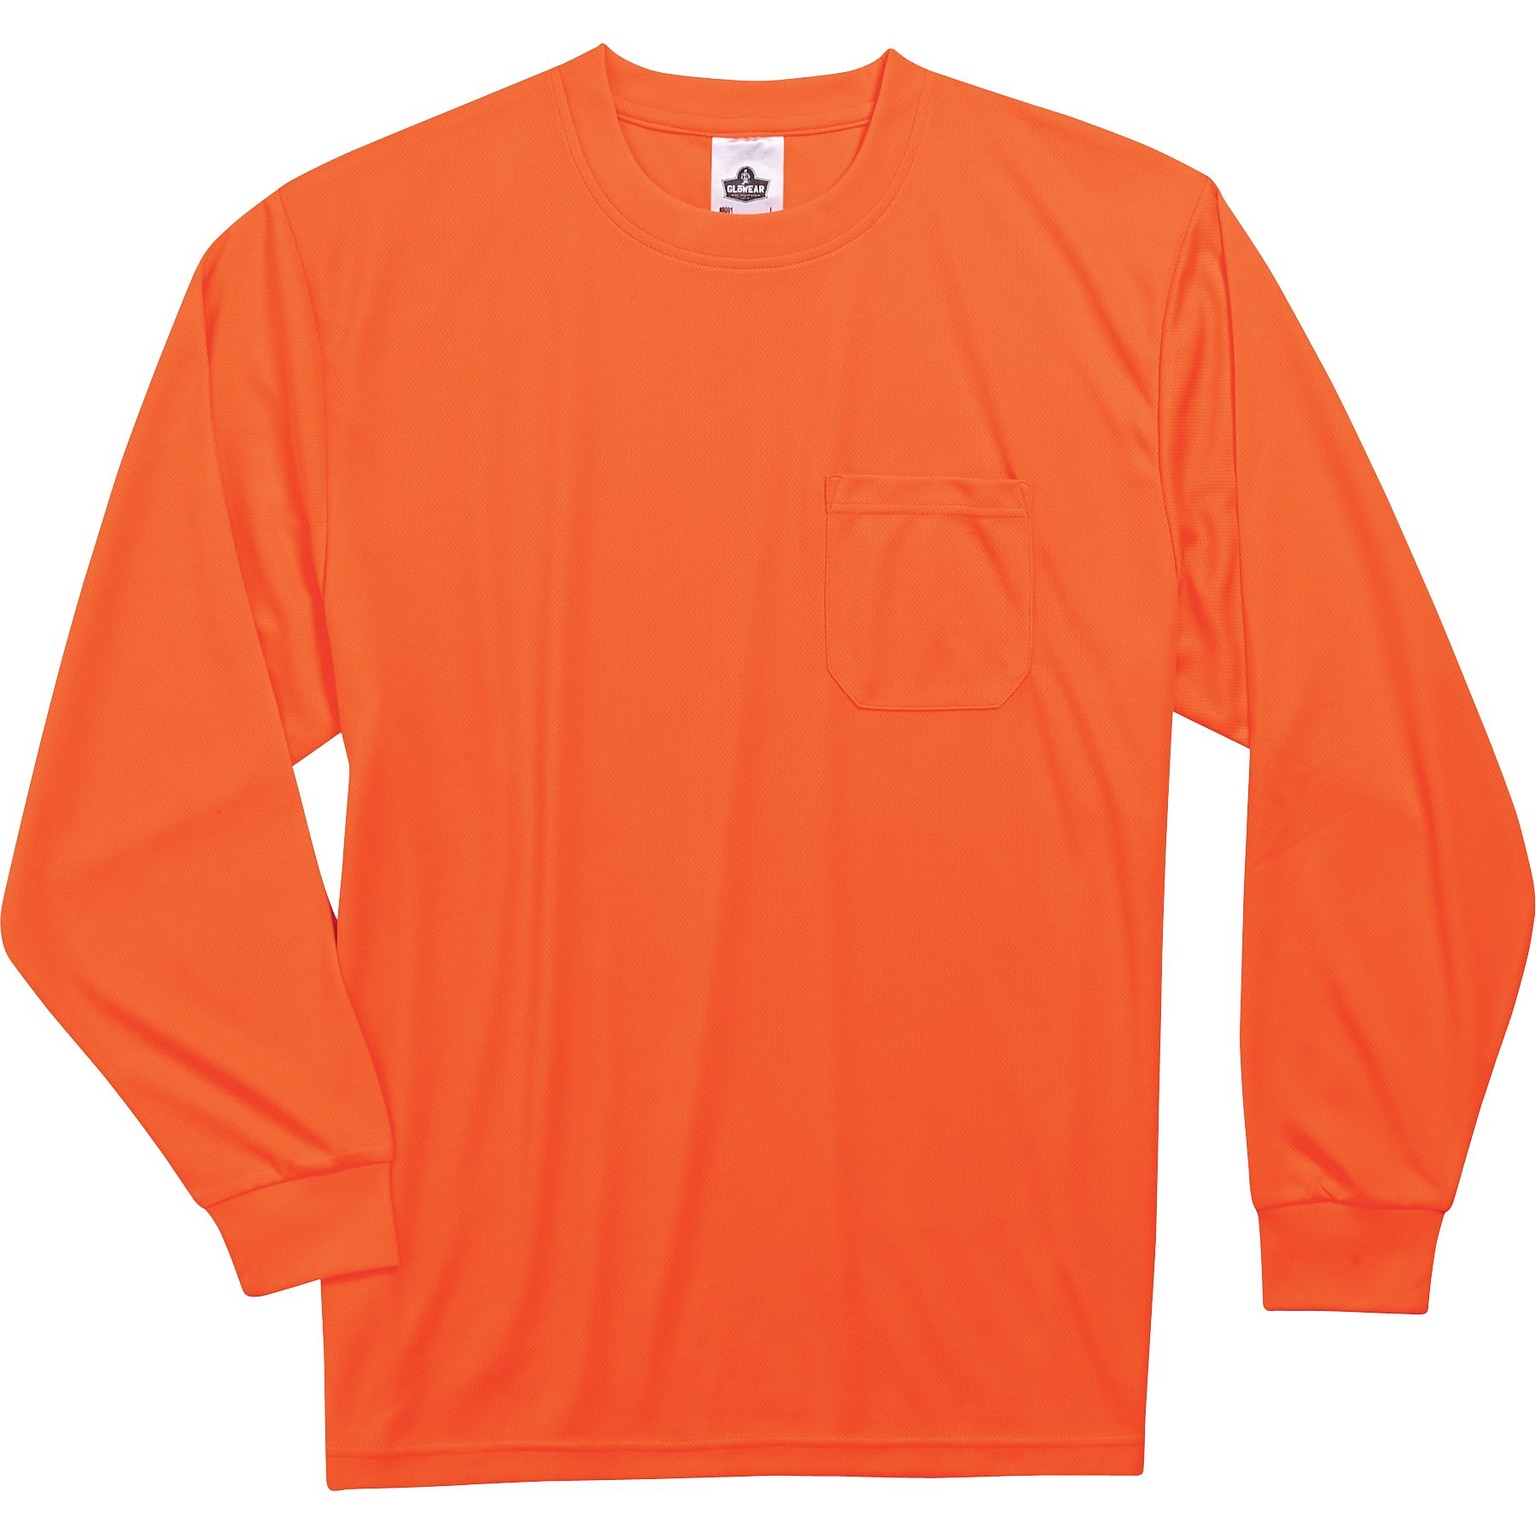 Ergodyne GloWear 8091 High Visibility Long Sleeve T-Shirt, Orange, X-Large (21595)